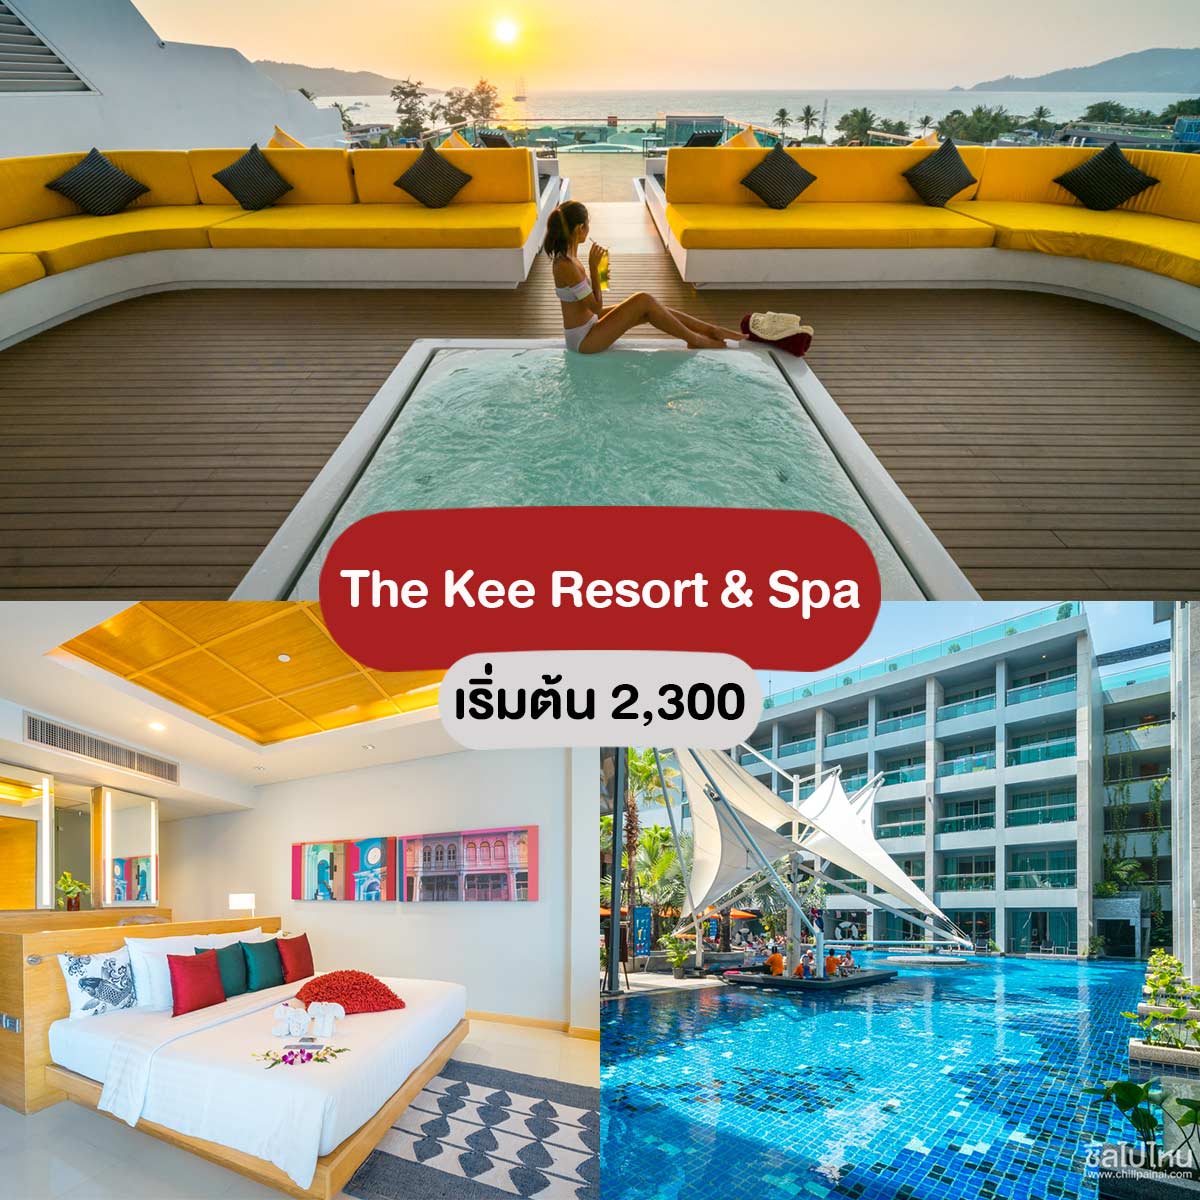 The Kee Resort & Spa - ที่พักภูเก็ตวิวทะเล